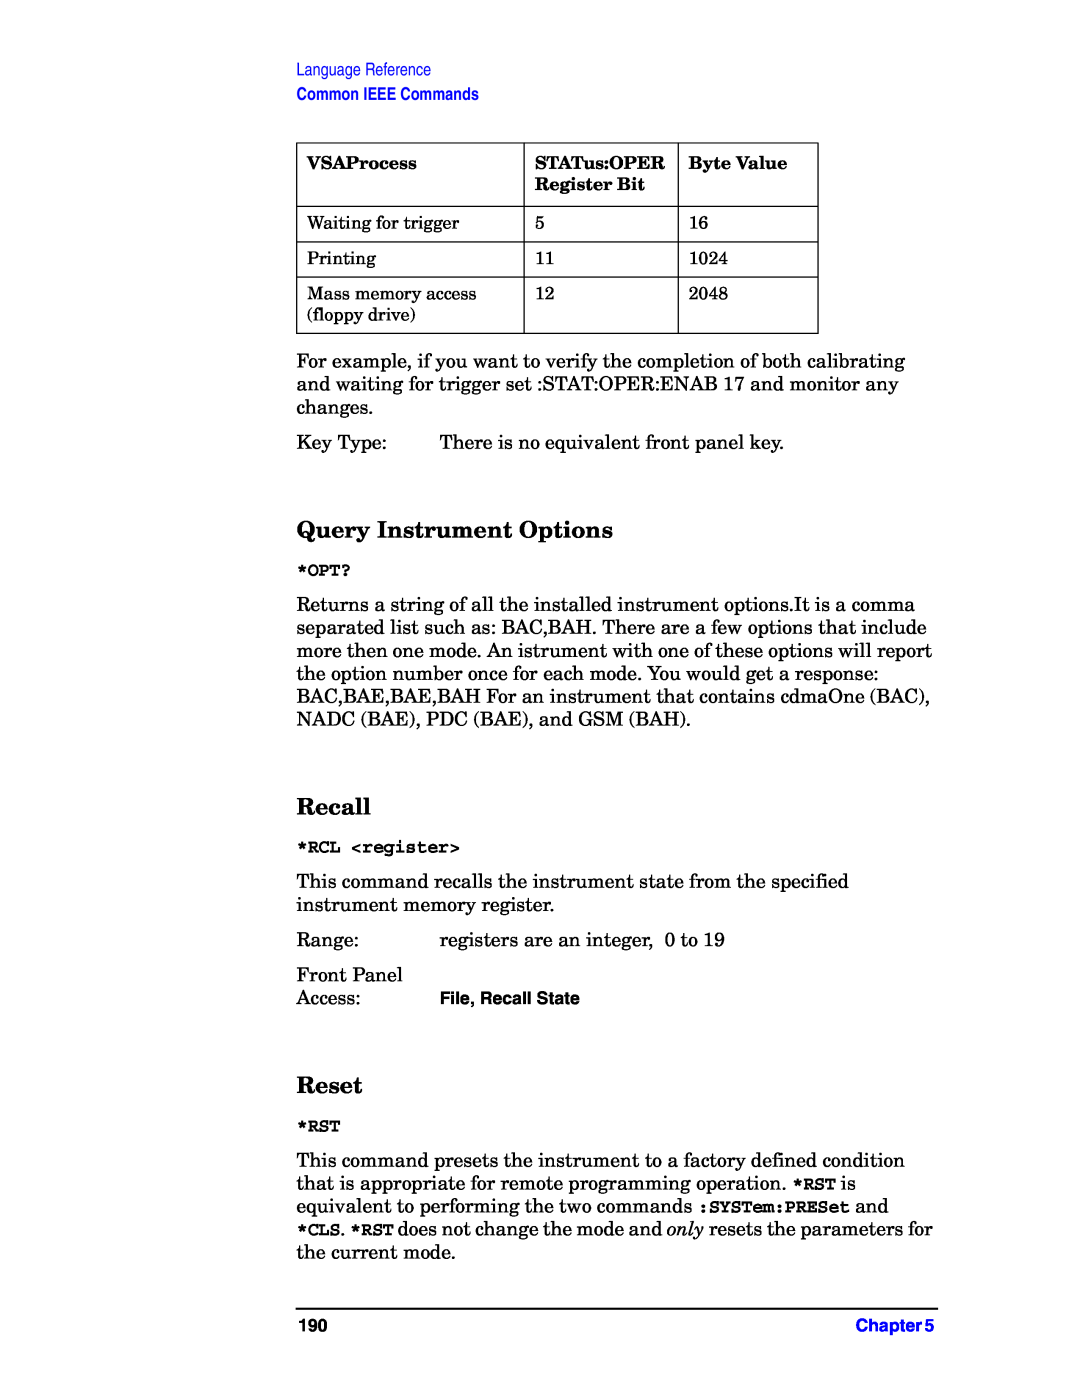 Agilent Technologies E4406A VSA manual Query Instrument Options, Recall, Reset, Opt?, RCL <register> 